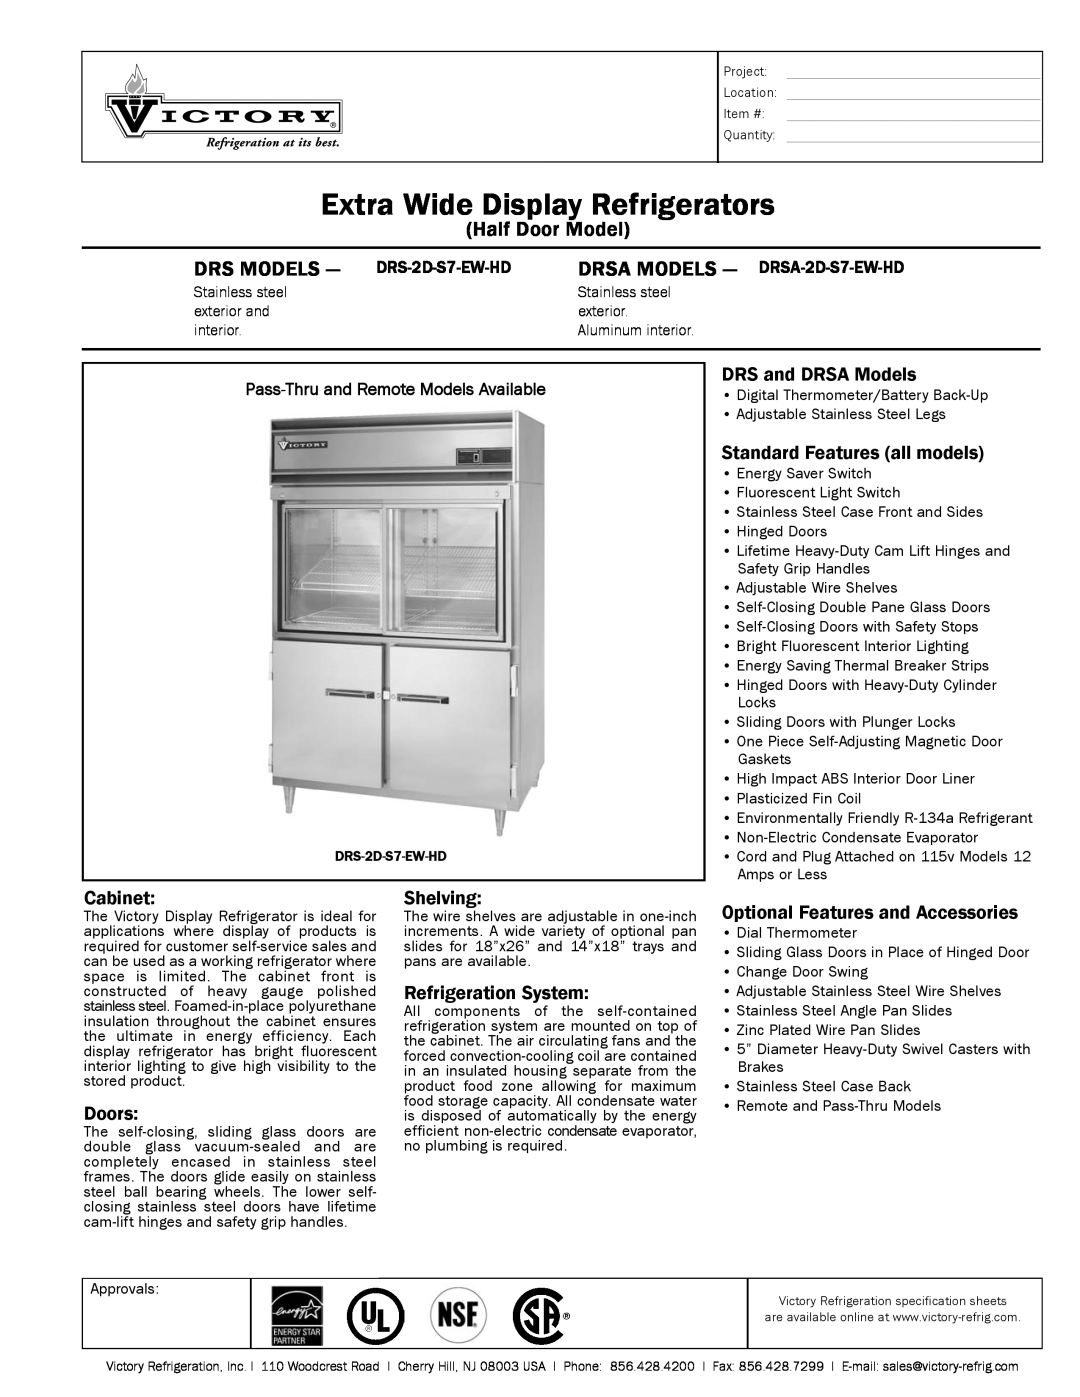 Victory Refrigeration DRS-2D-S7-EW-HD specifications Extra Wide Display Refrigerators, Half Door Model, Cabinet, Doors 